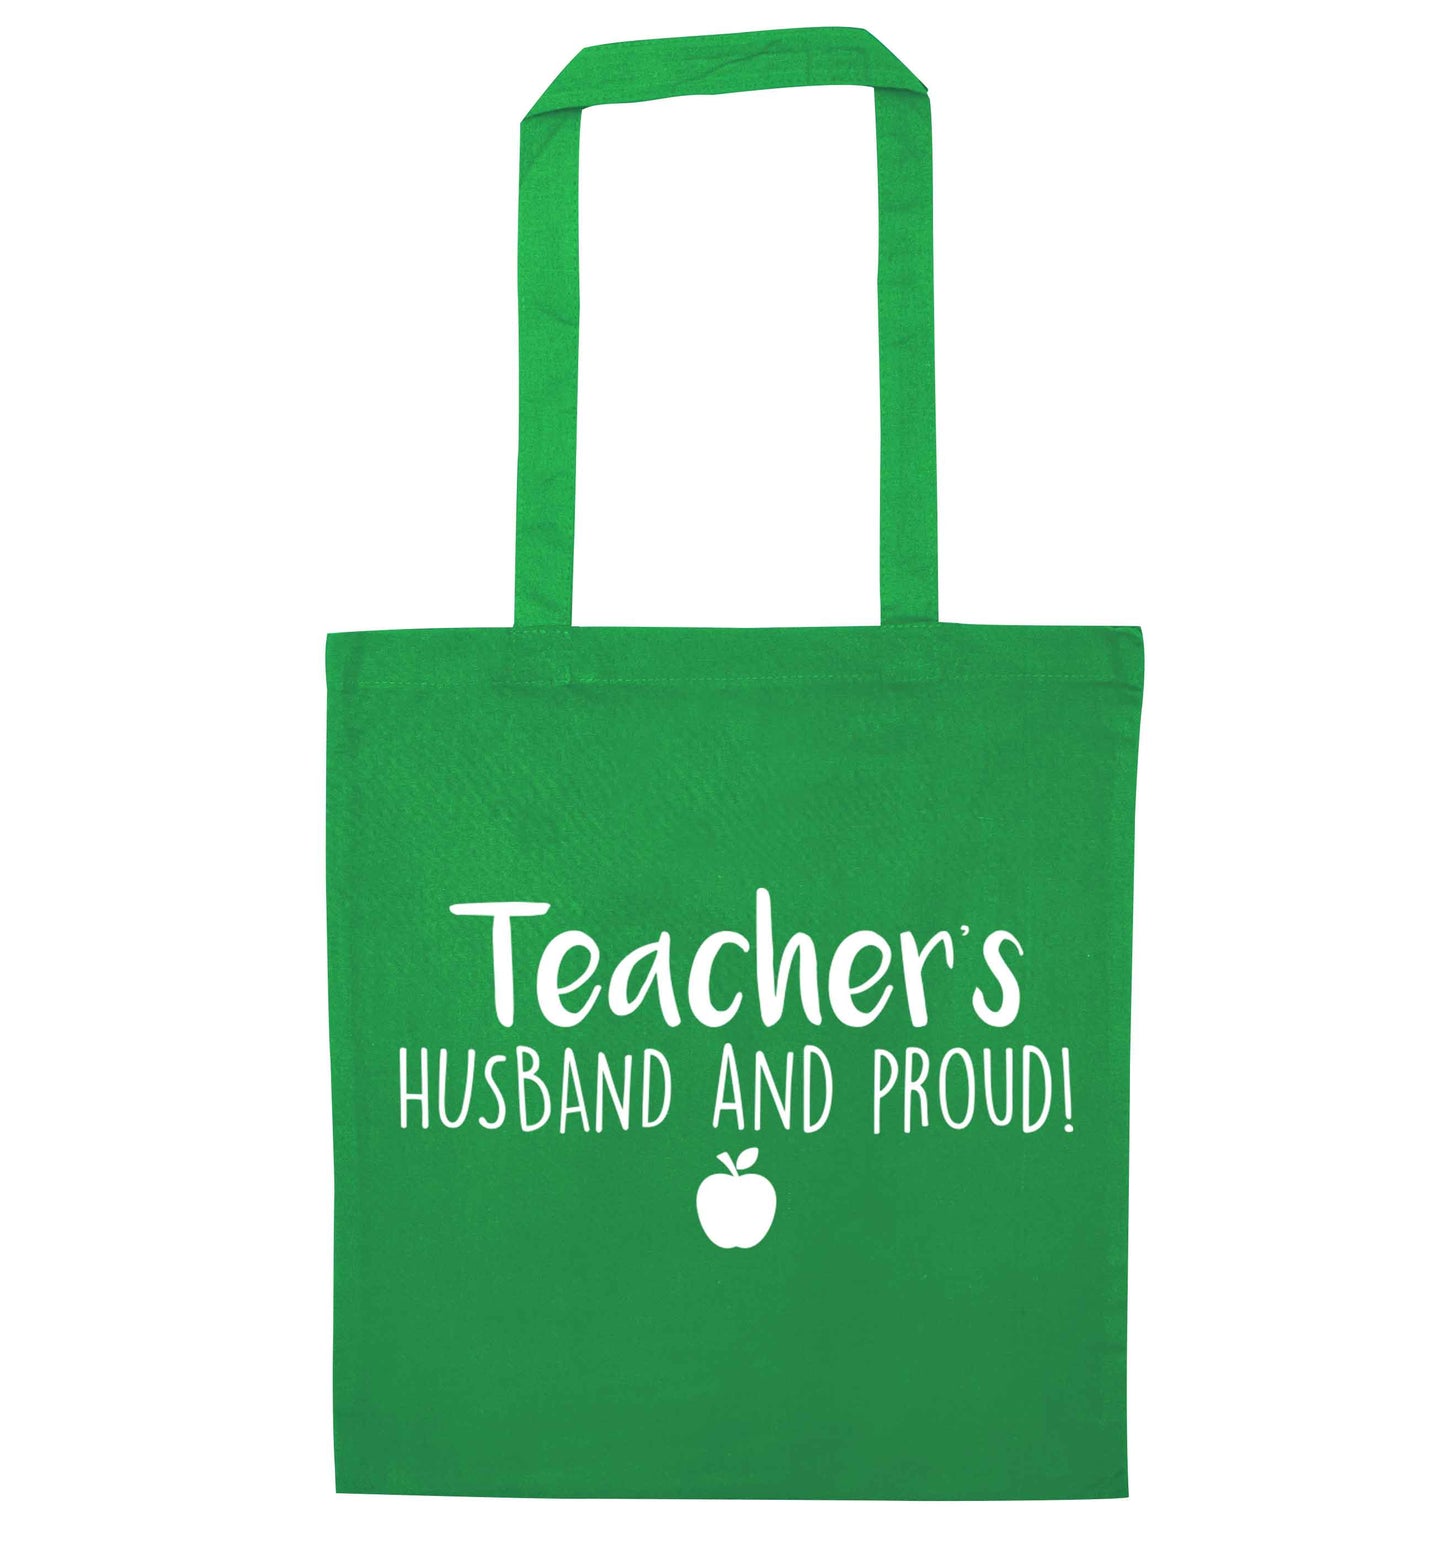 Teachers husband and proud green tote bag